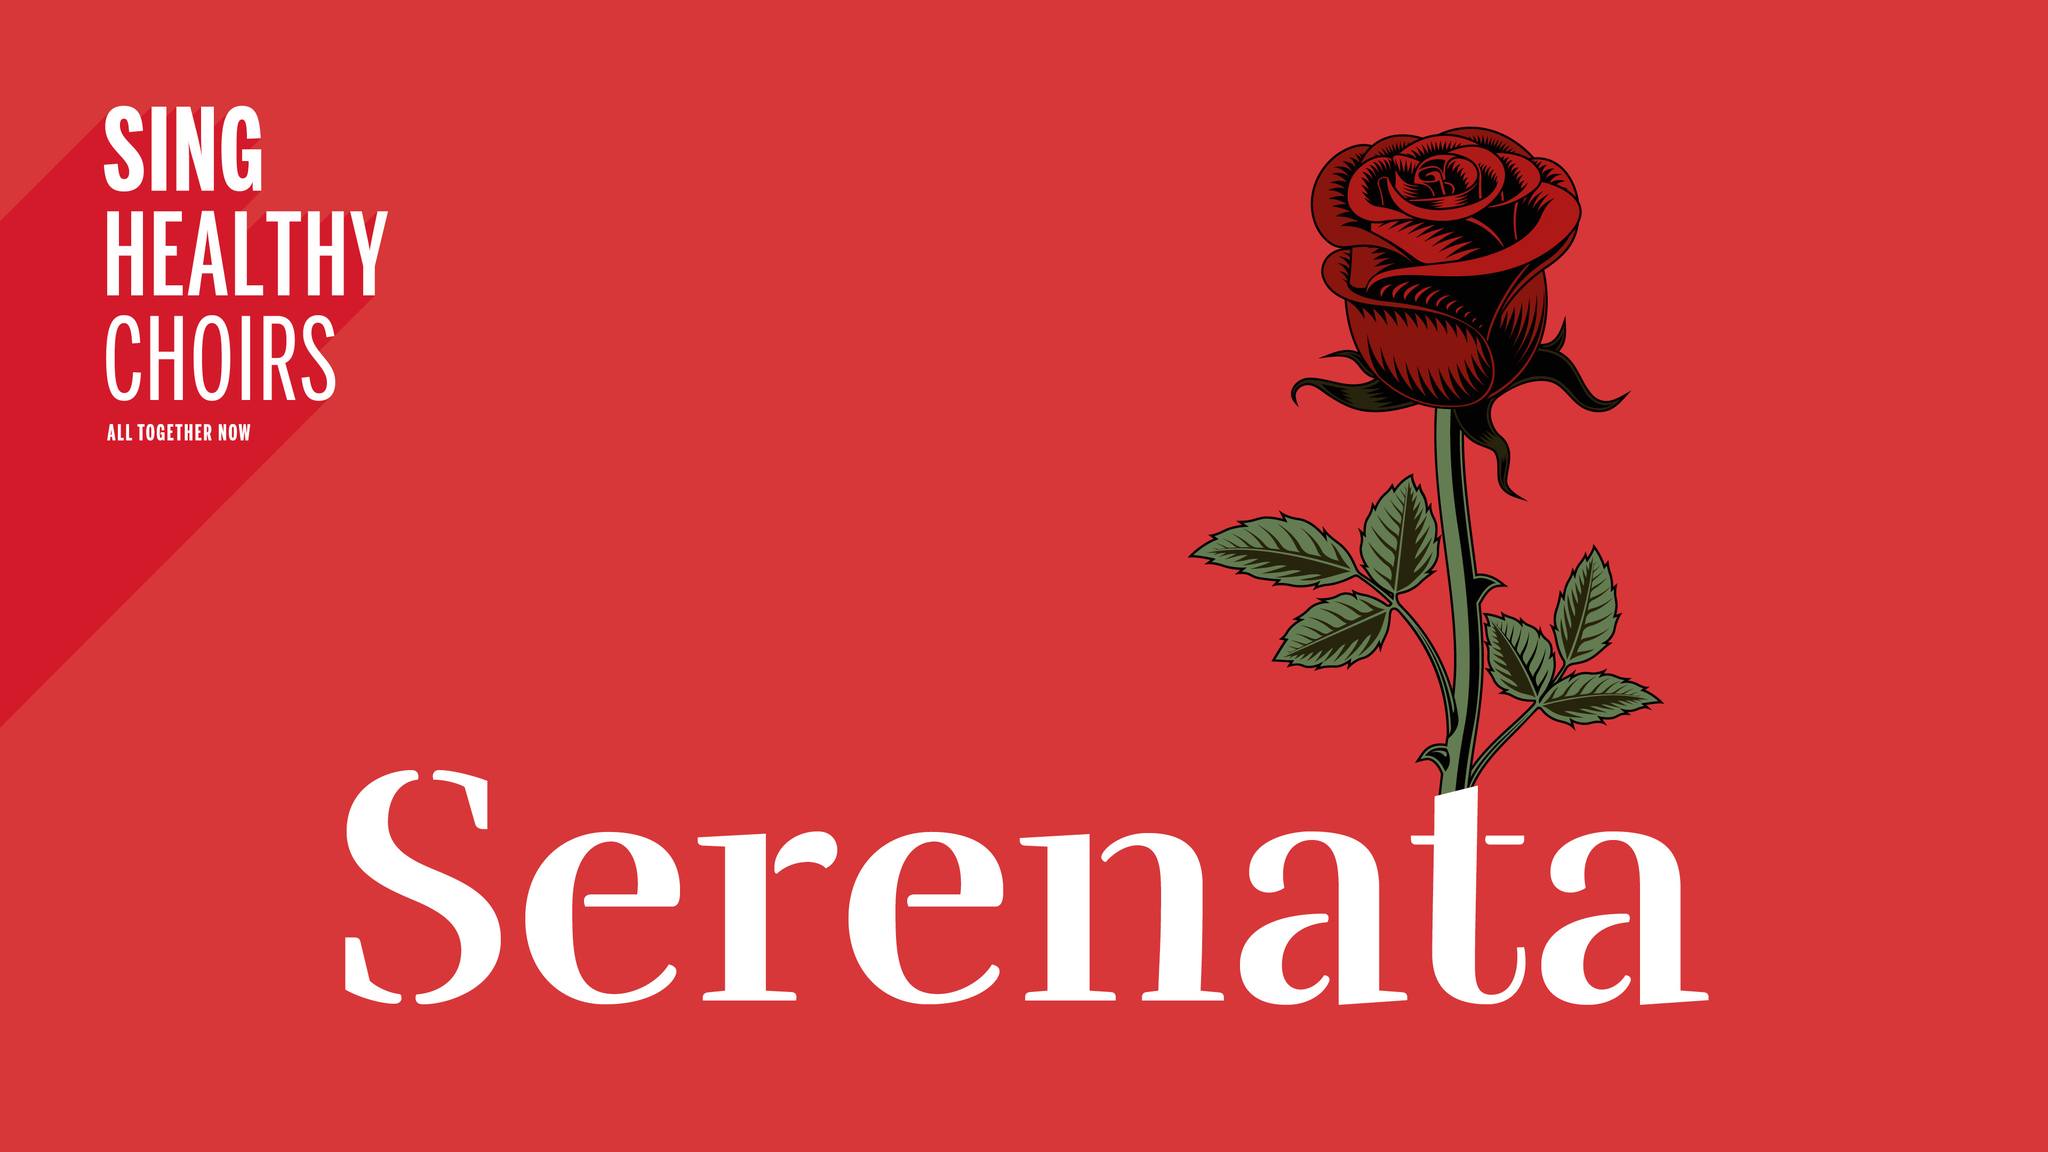 Serenata Concert – Opera Choruses & Folk Songs